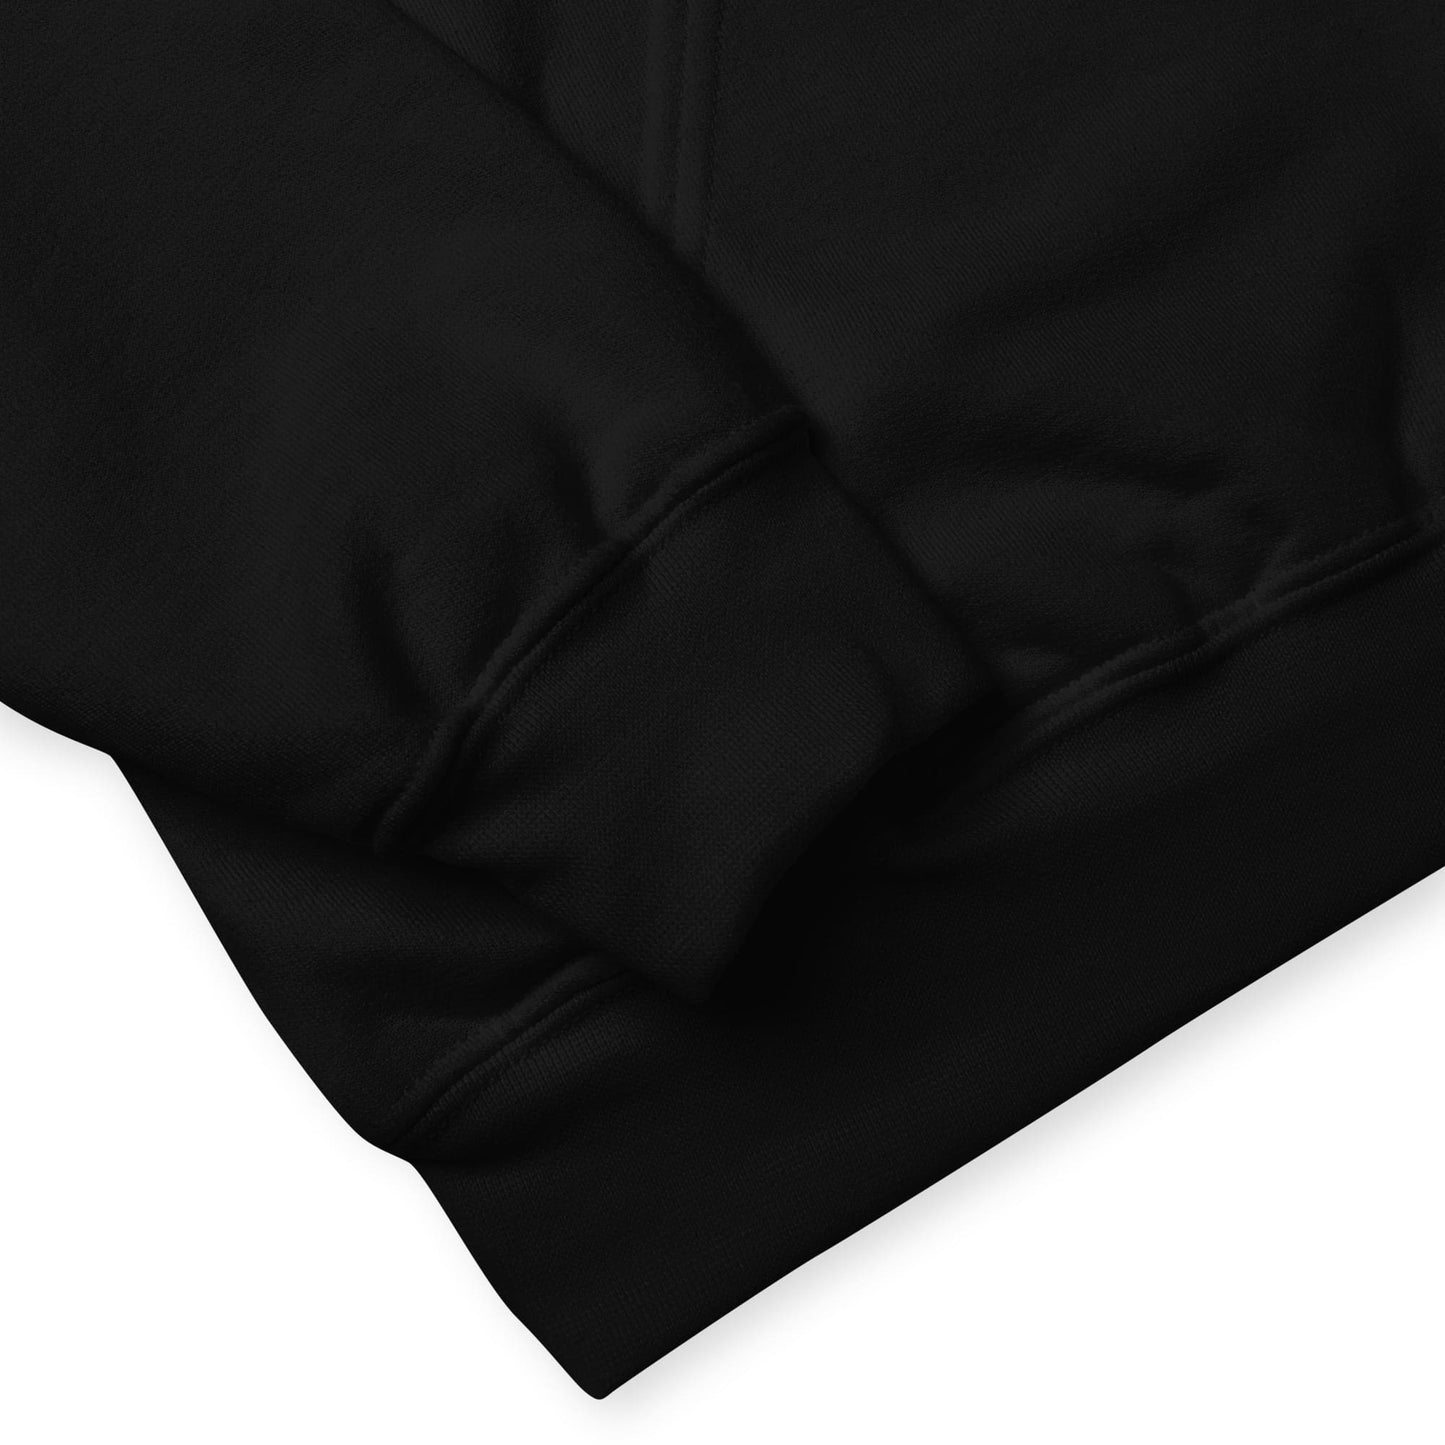 genderfluid hoodie, subtle gender fluid pride flag embroidered pocket design hooded sweatshirt, sleeve